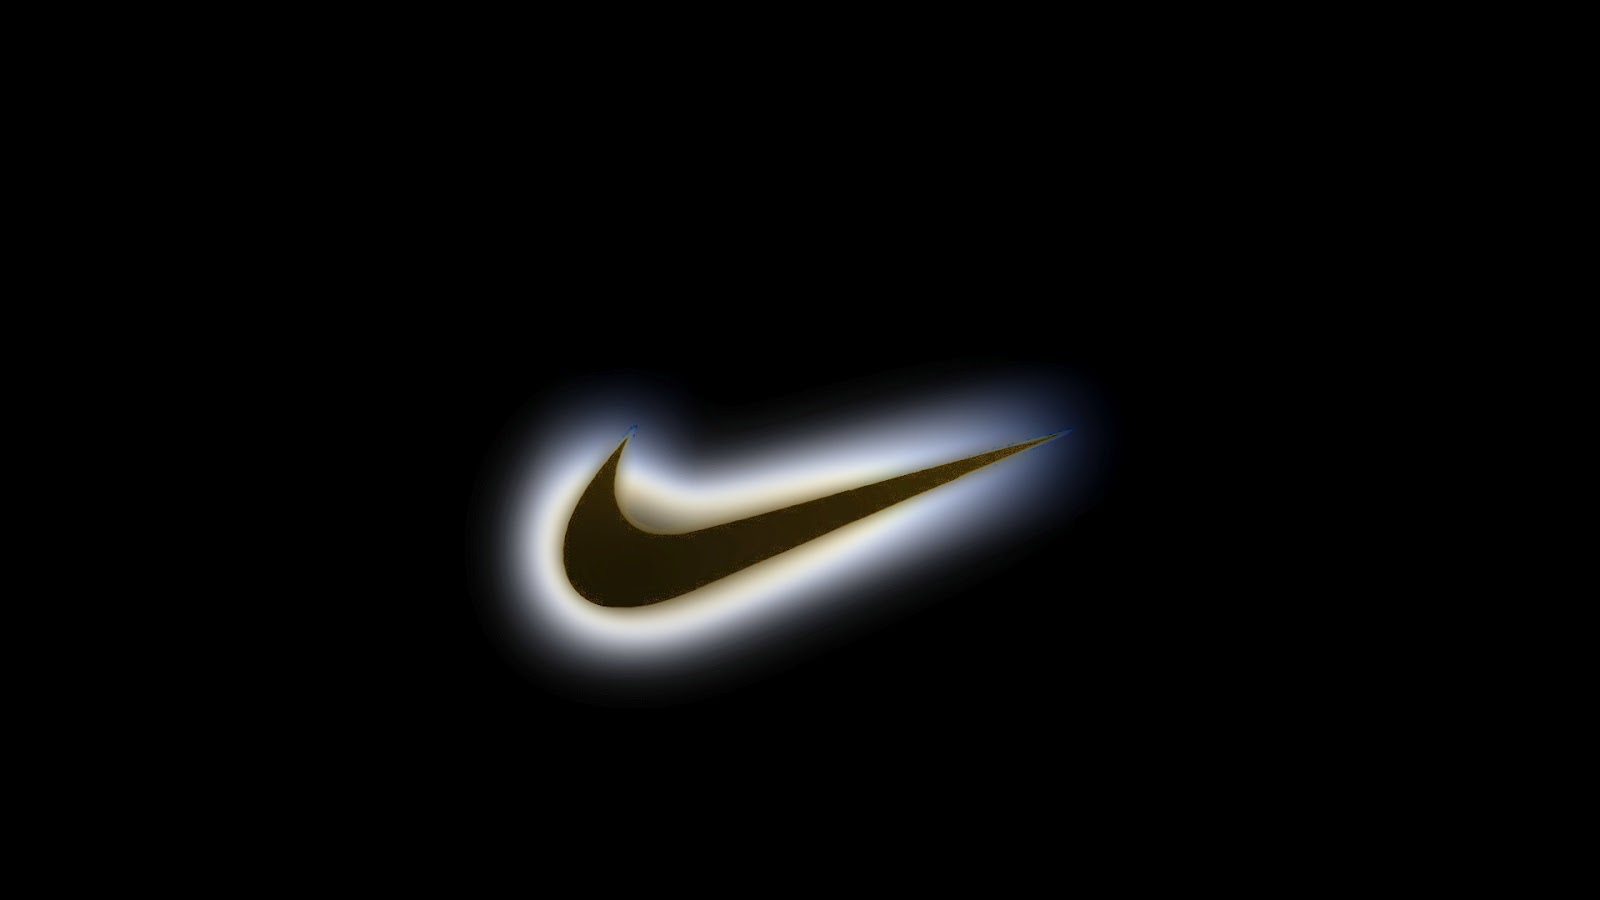 Nike Sign Wallpaper